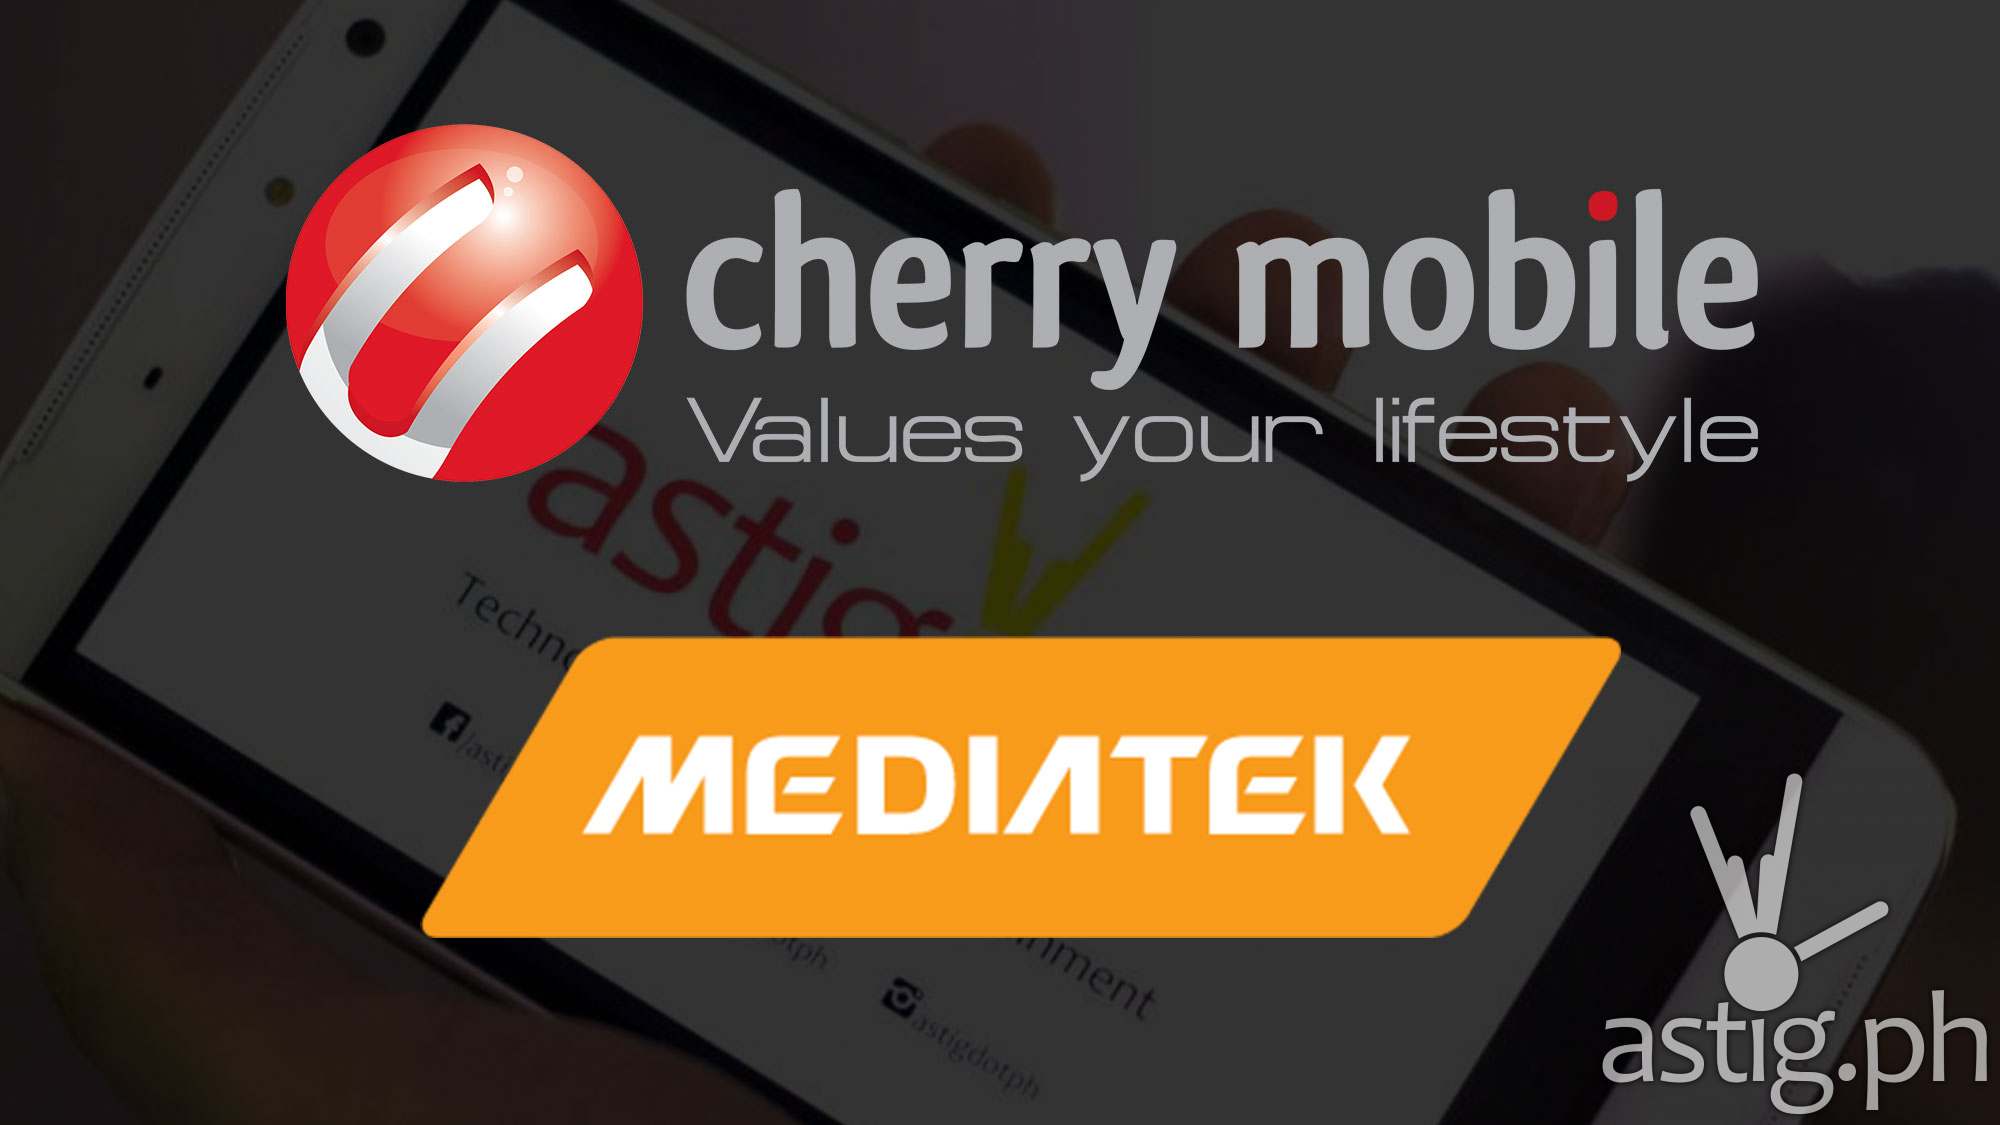 5g cherry mobile phones coming soon mediatek astig ph 5g cherry mobile phones coming soon